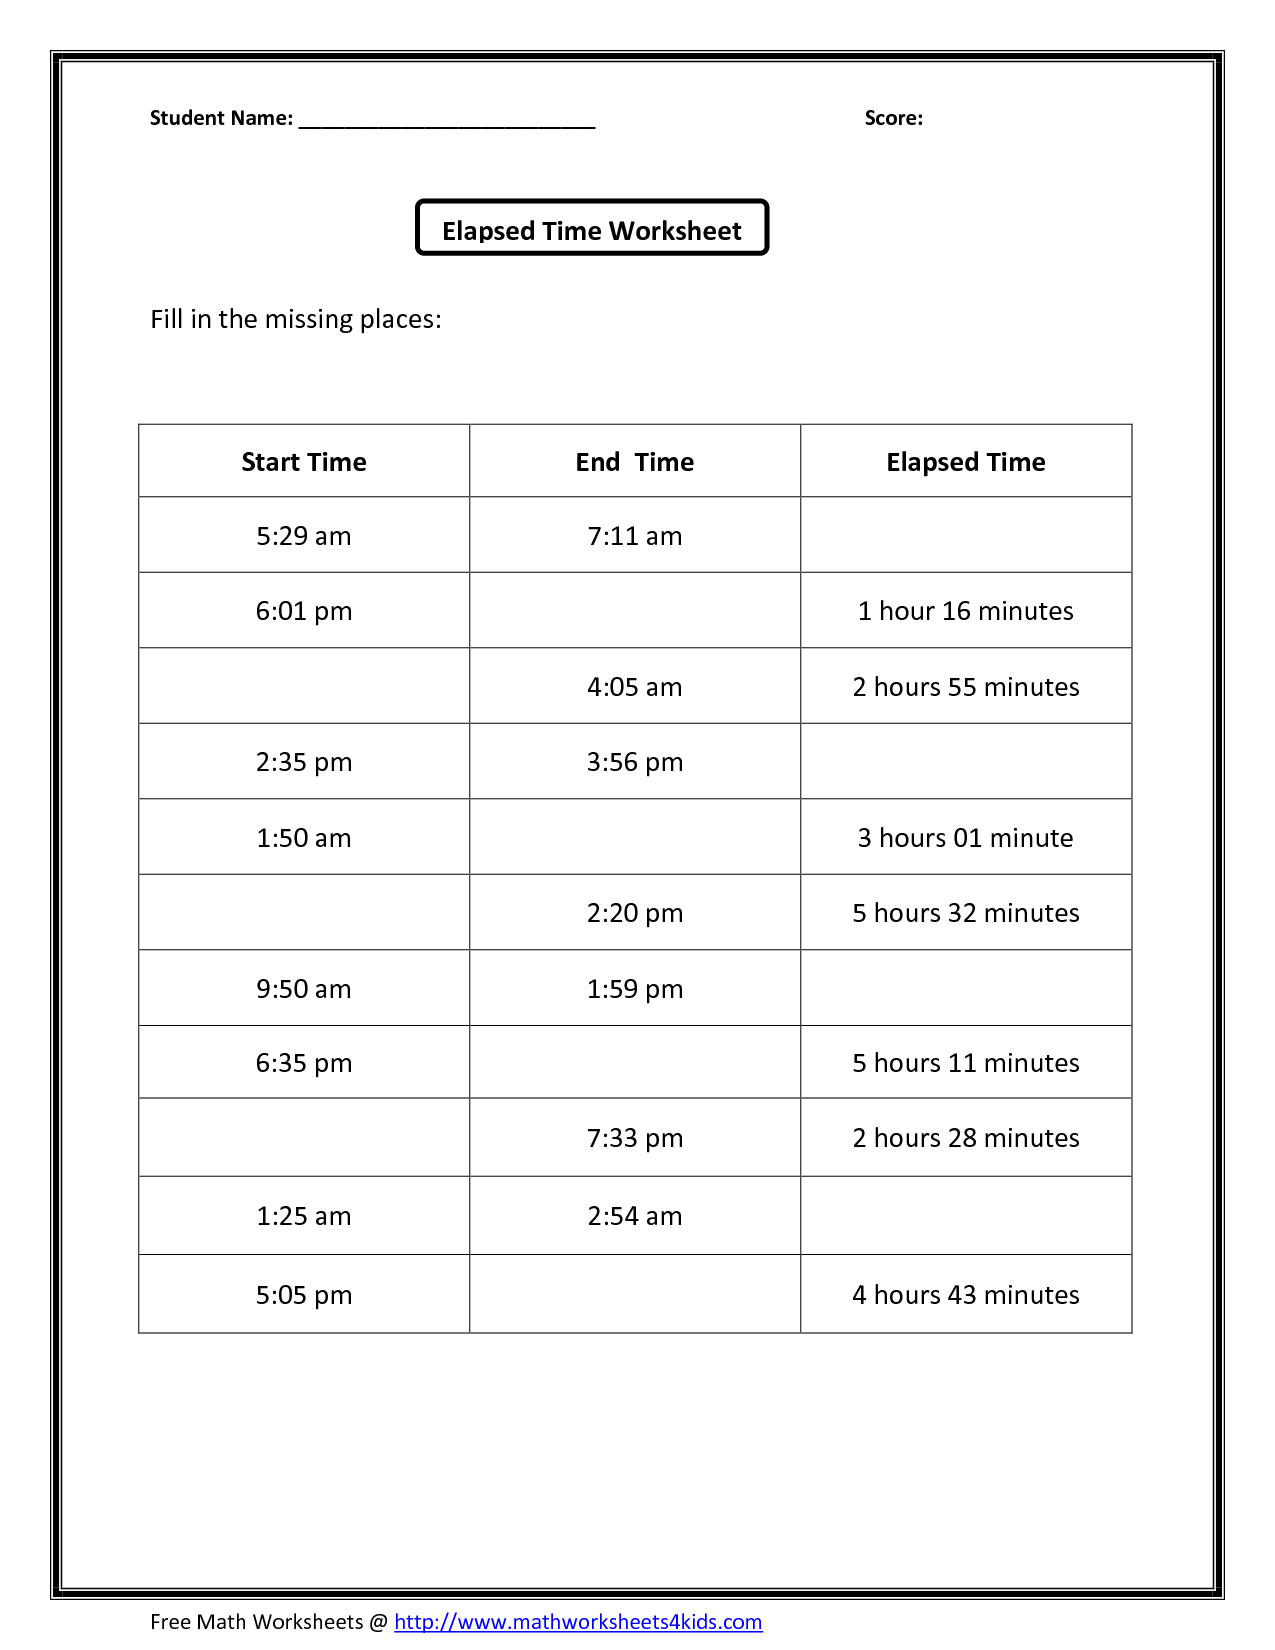 Elapsed Time Worksheets Image